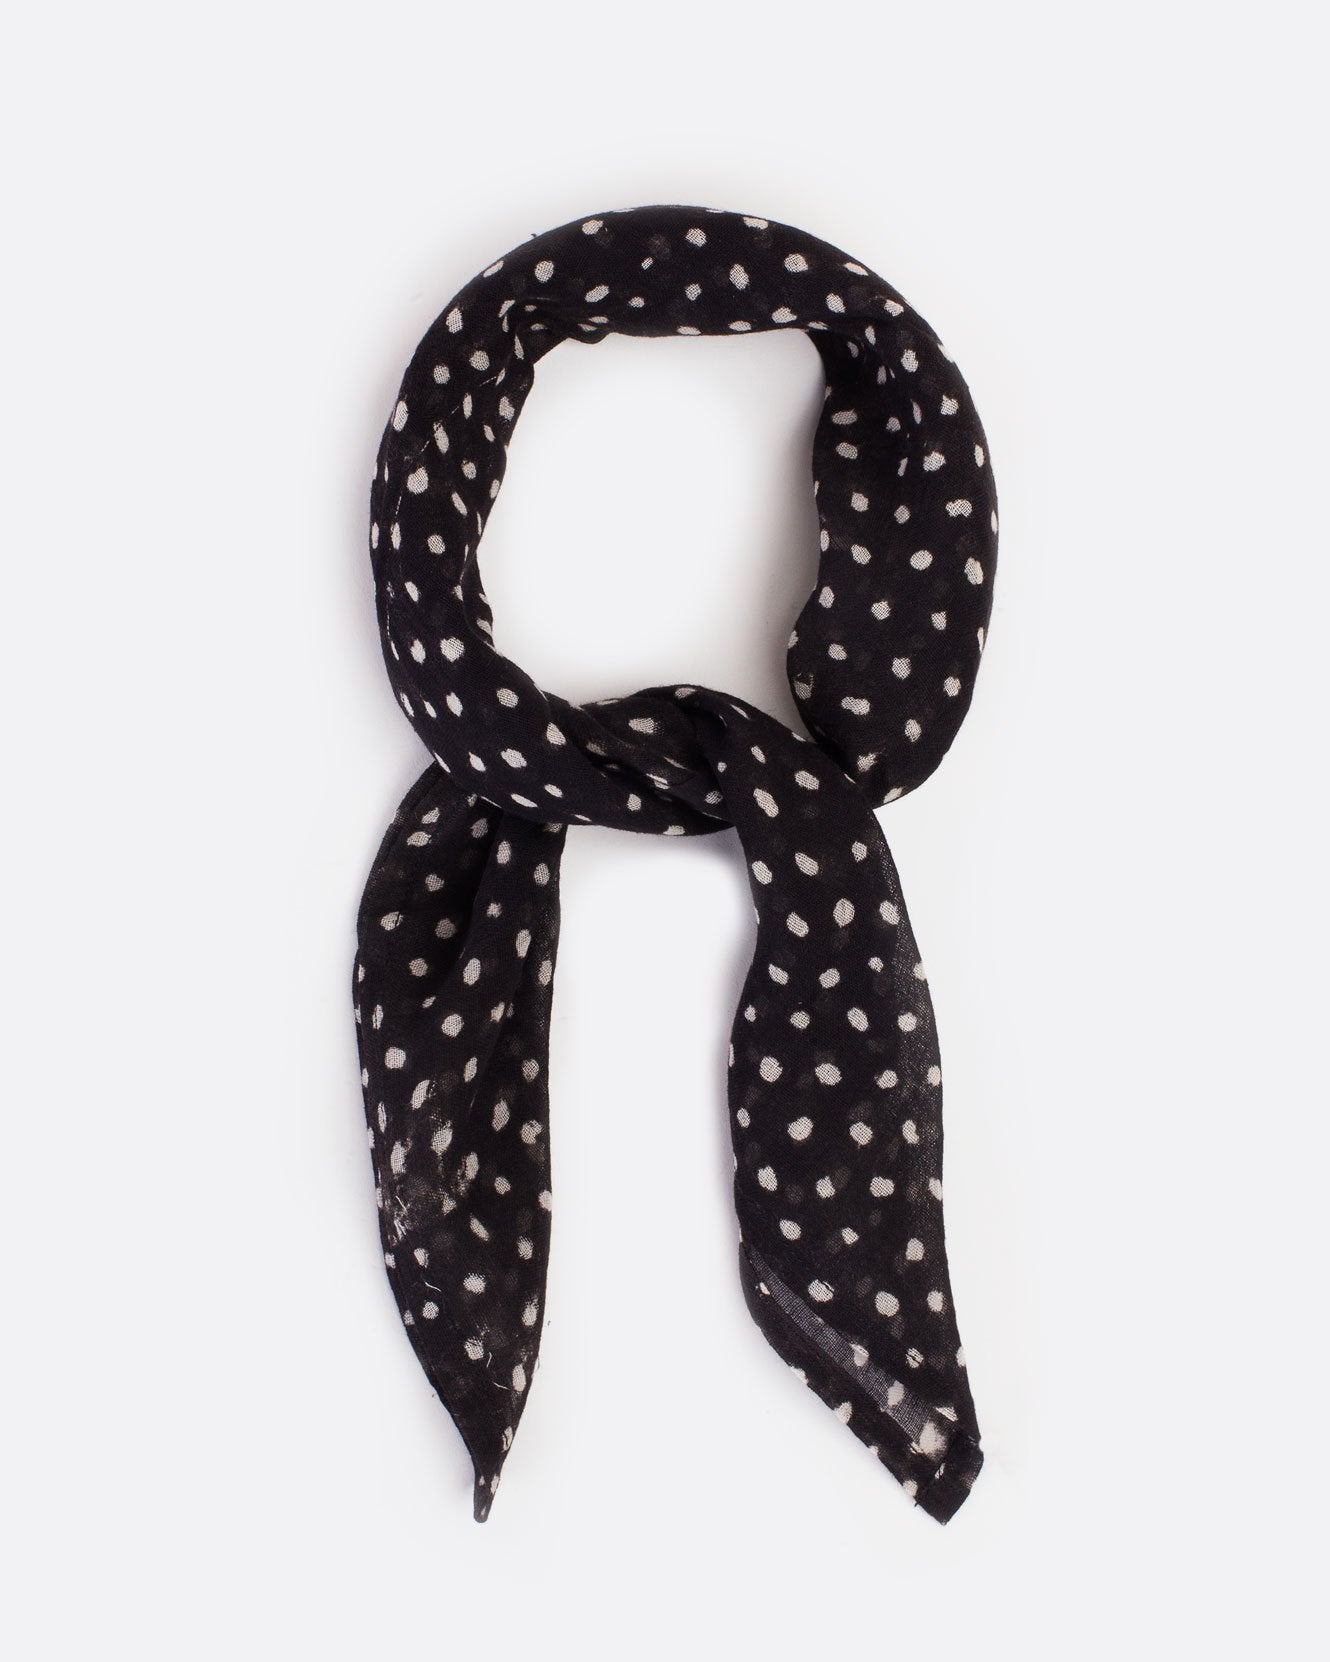 Black bandana with white polka dots, shown tied.